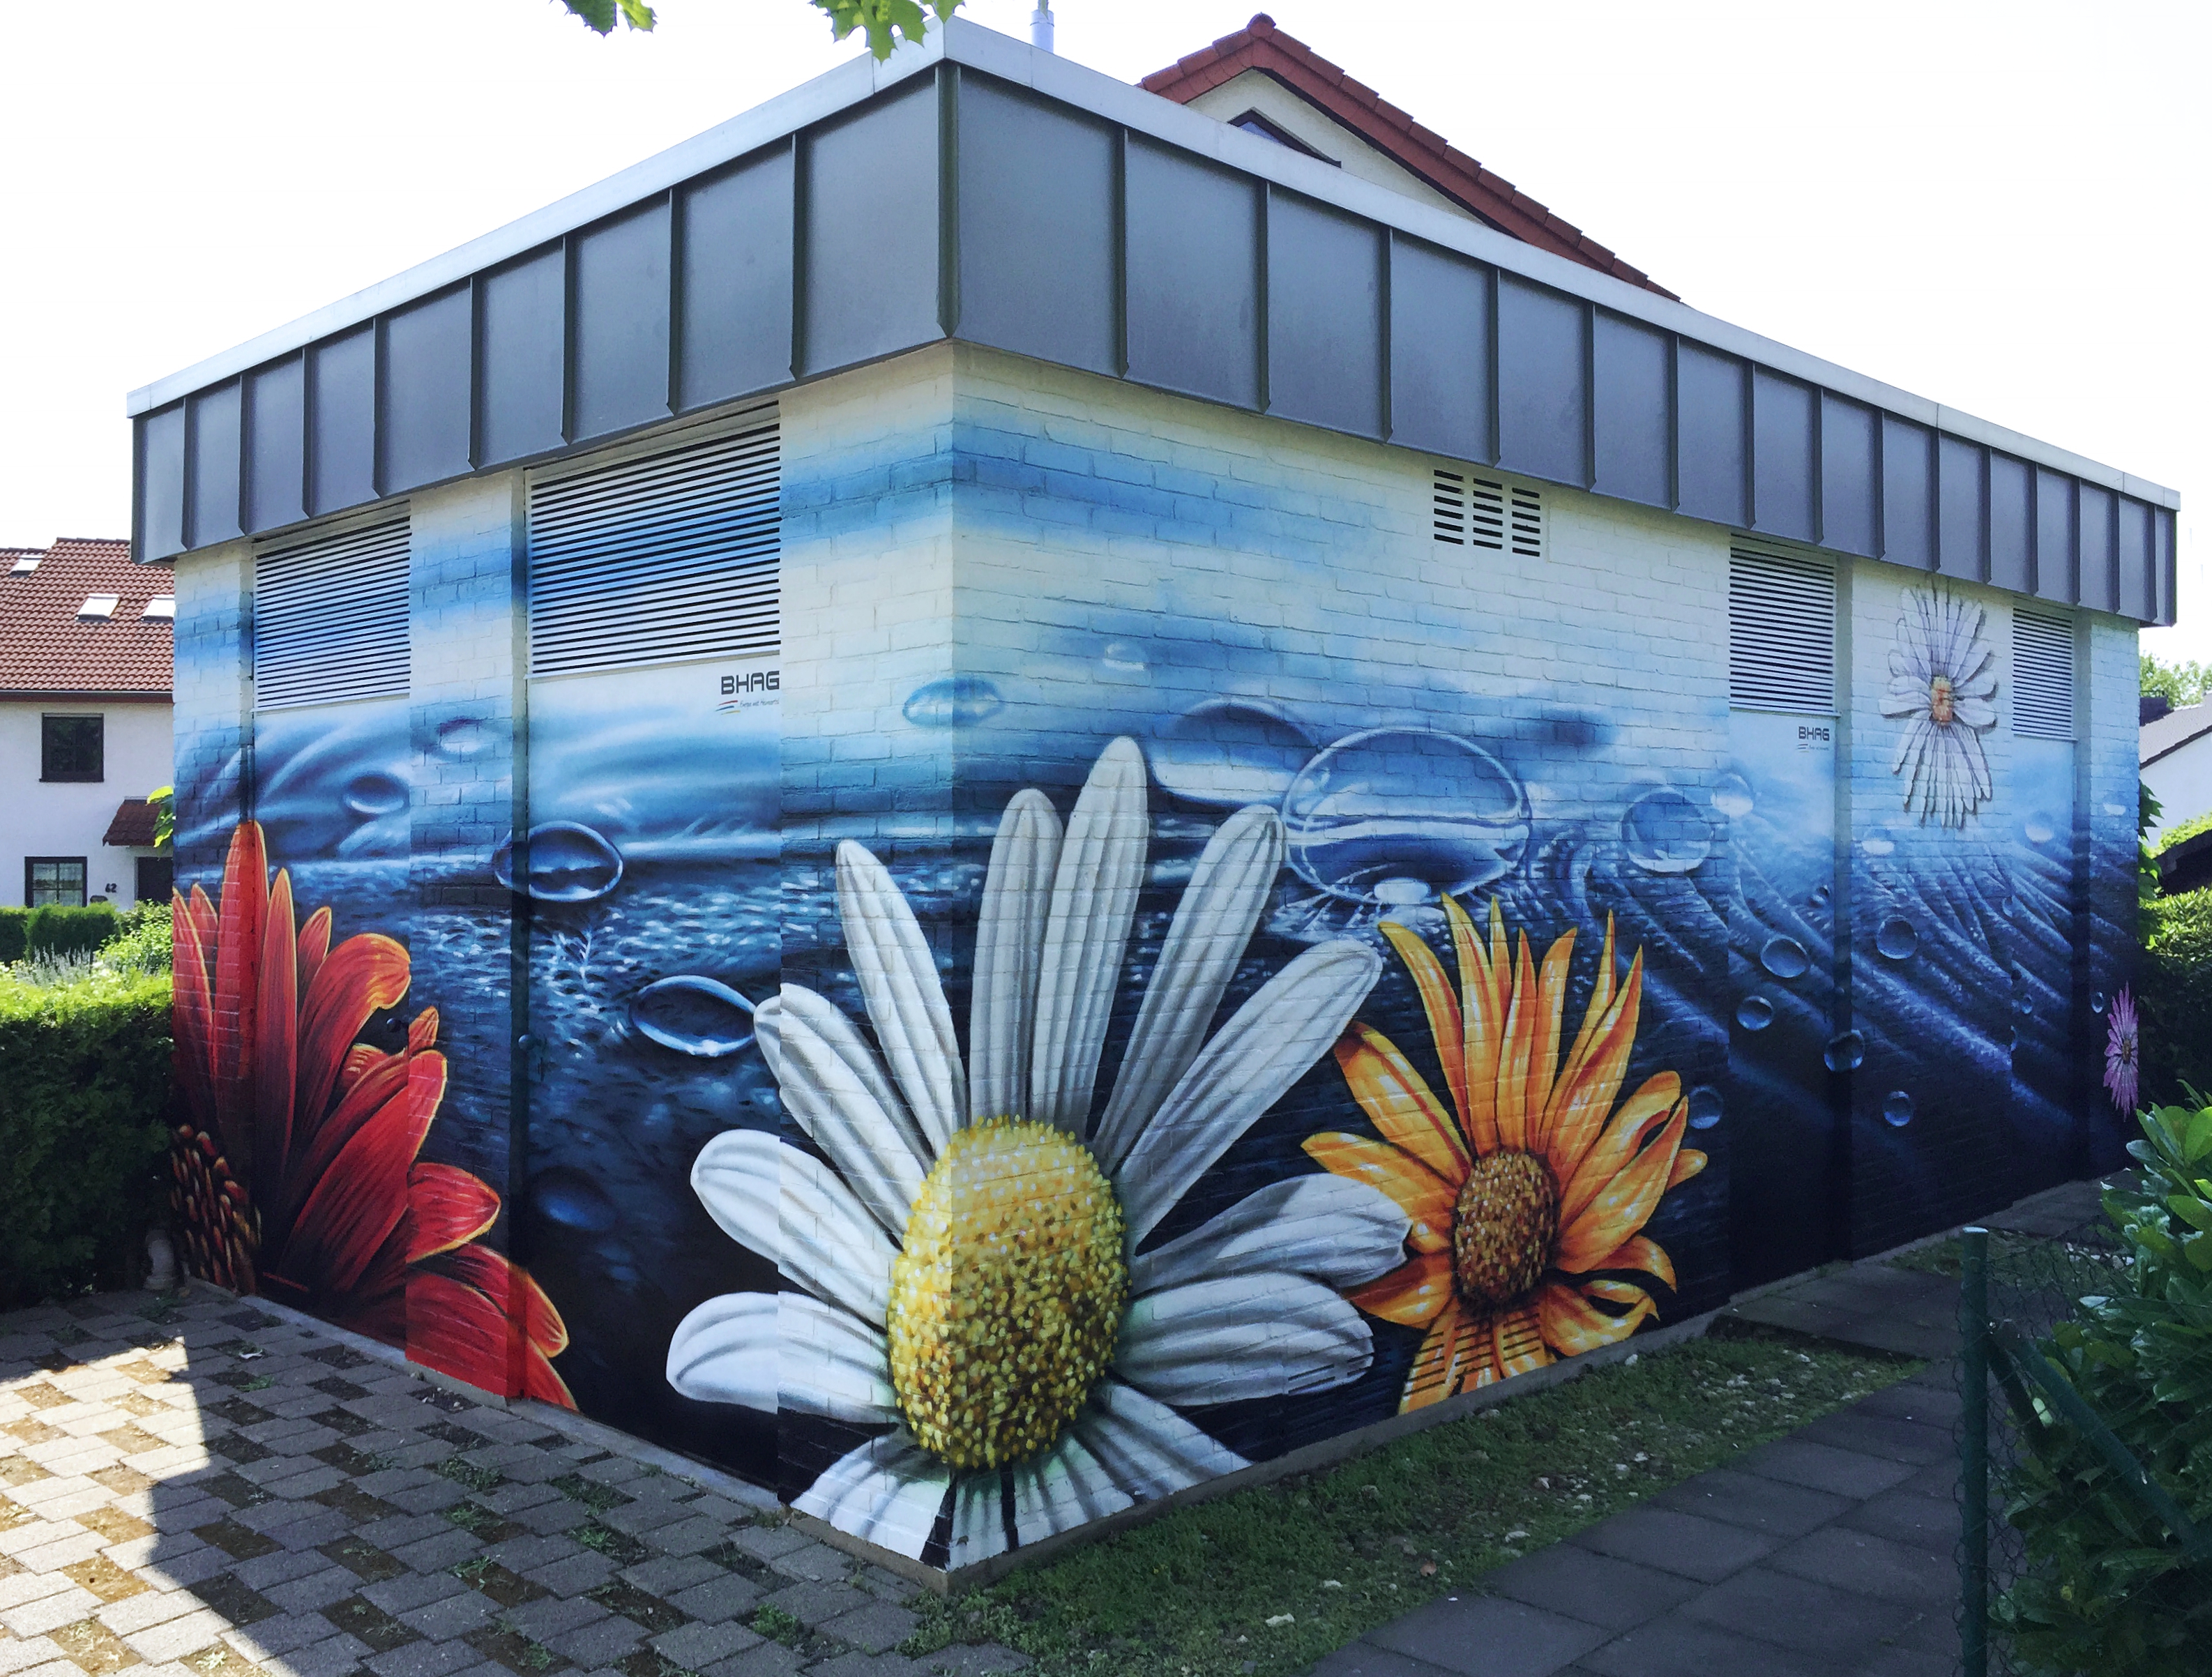 2015 - Graffiti Karlstraße